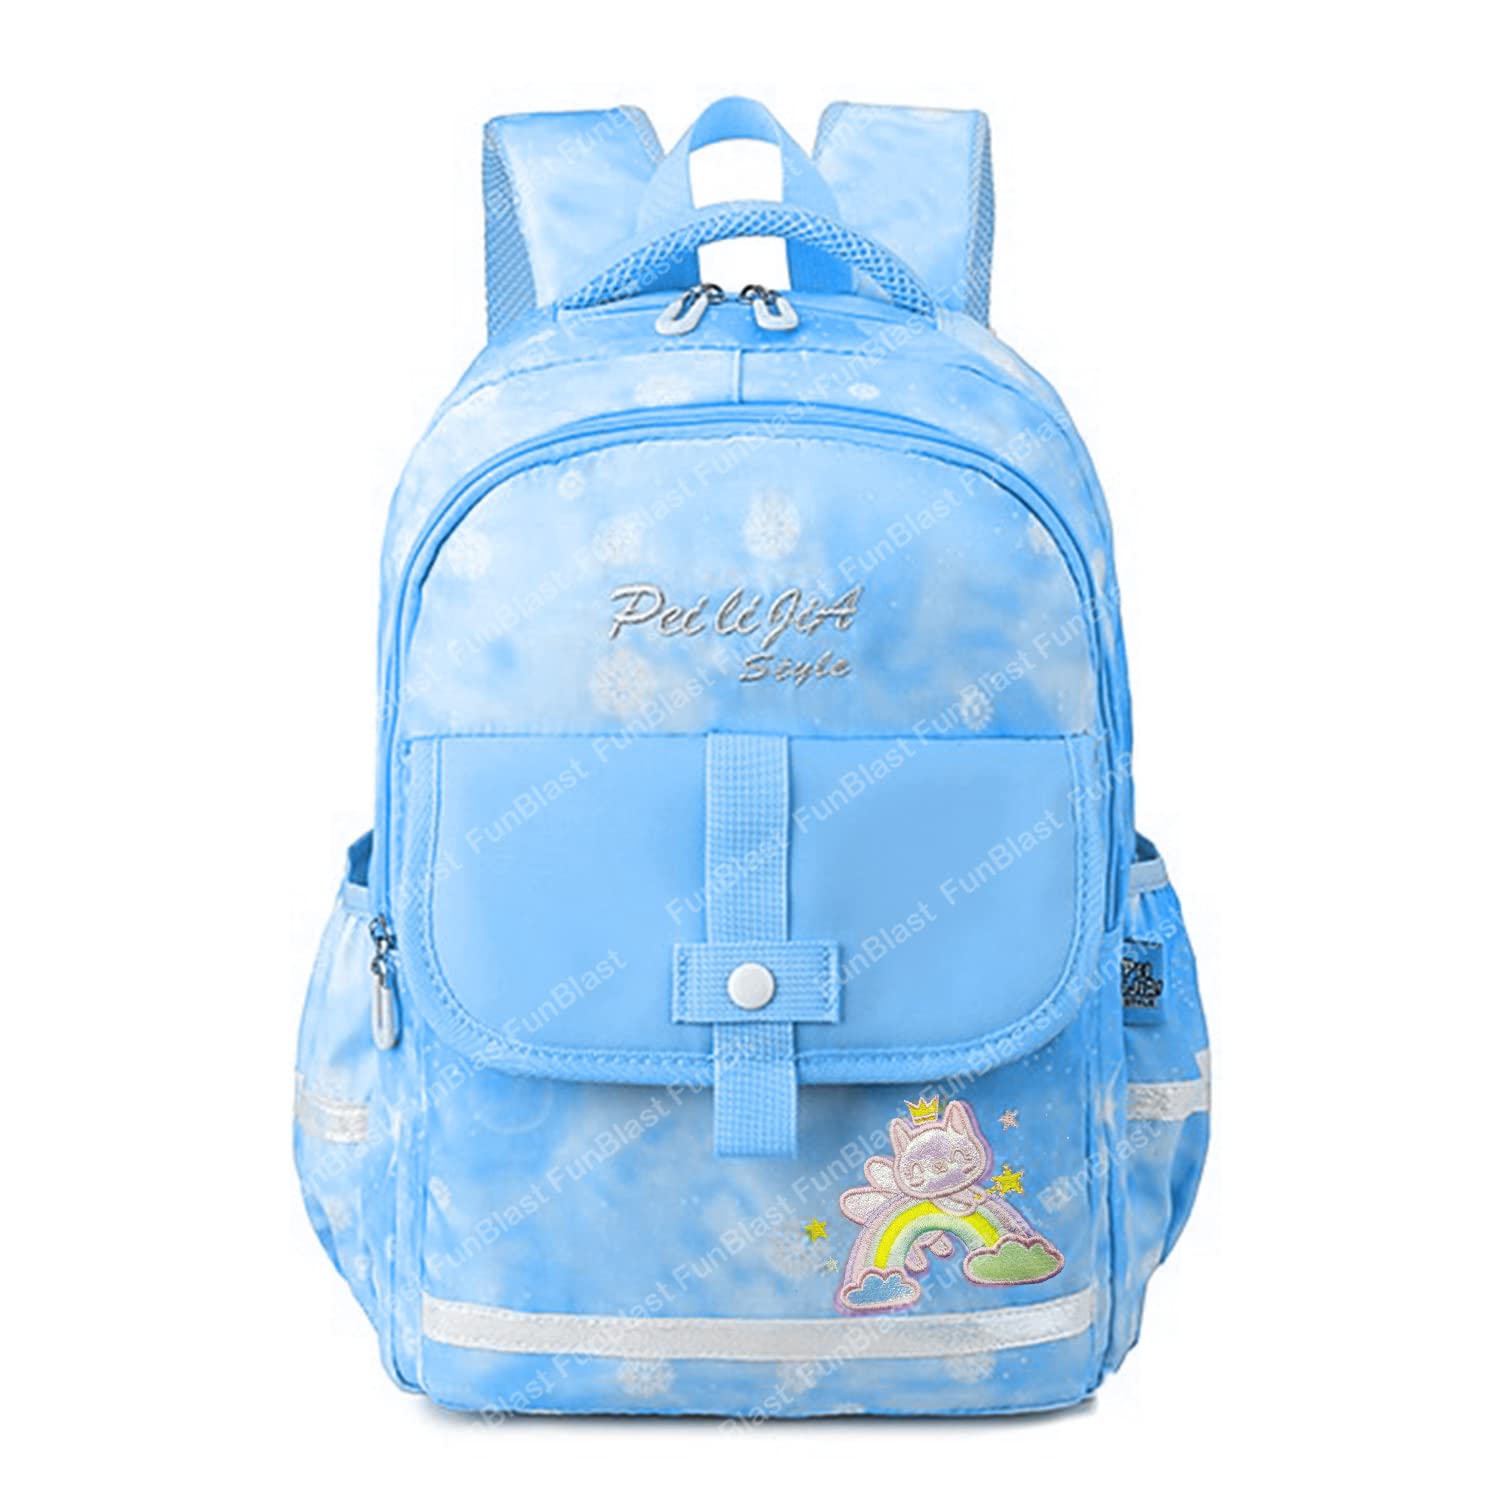 School Backpacks with Premium Fabric online - Buy Now